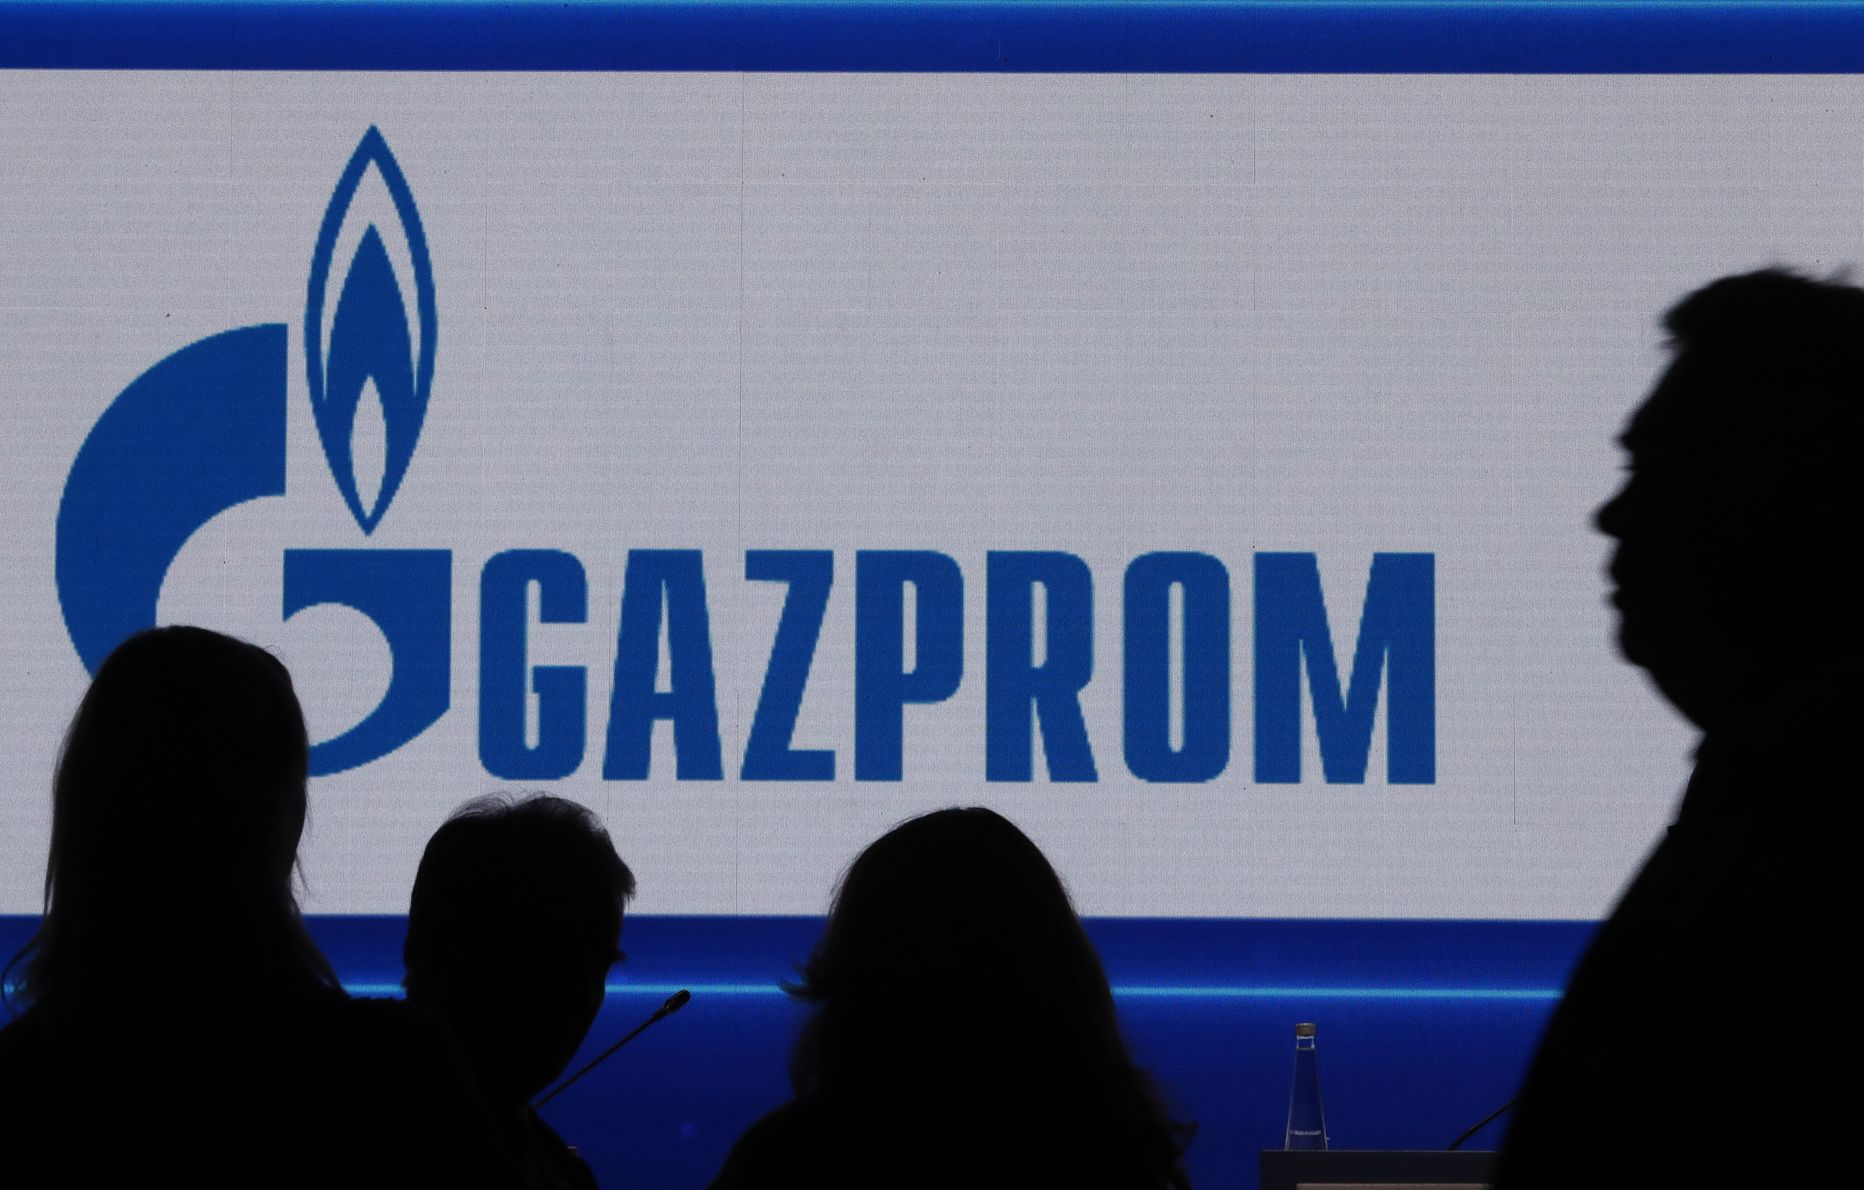 Gazpromi logo Peterburis septembris toimunud gaasifoorumil.